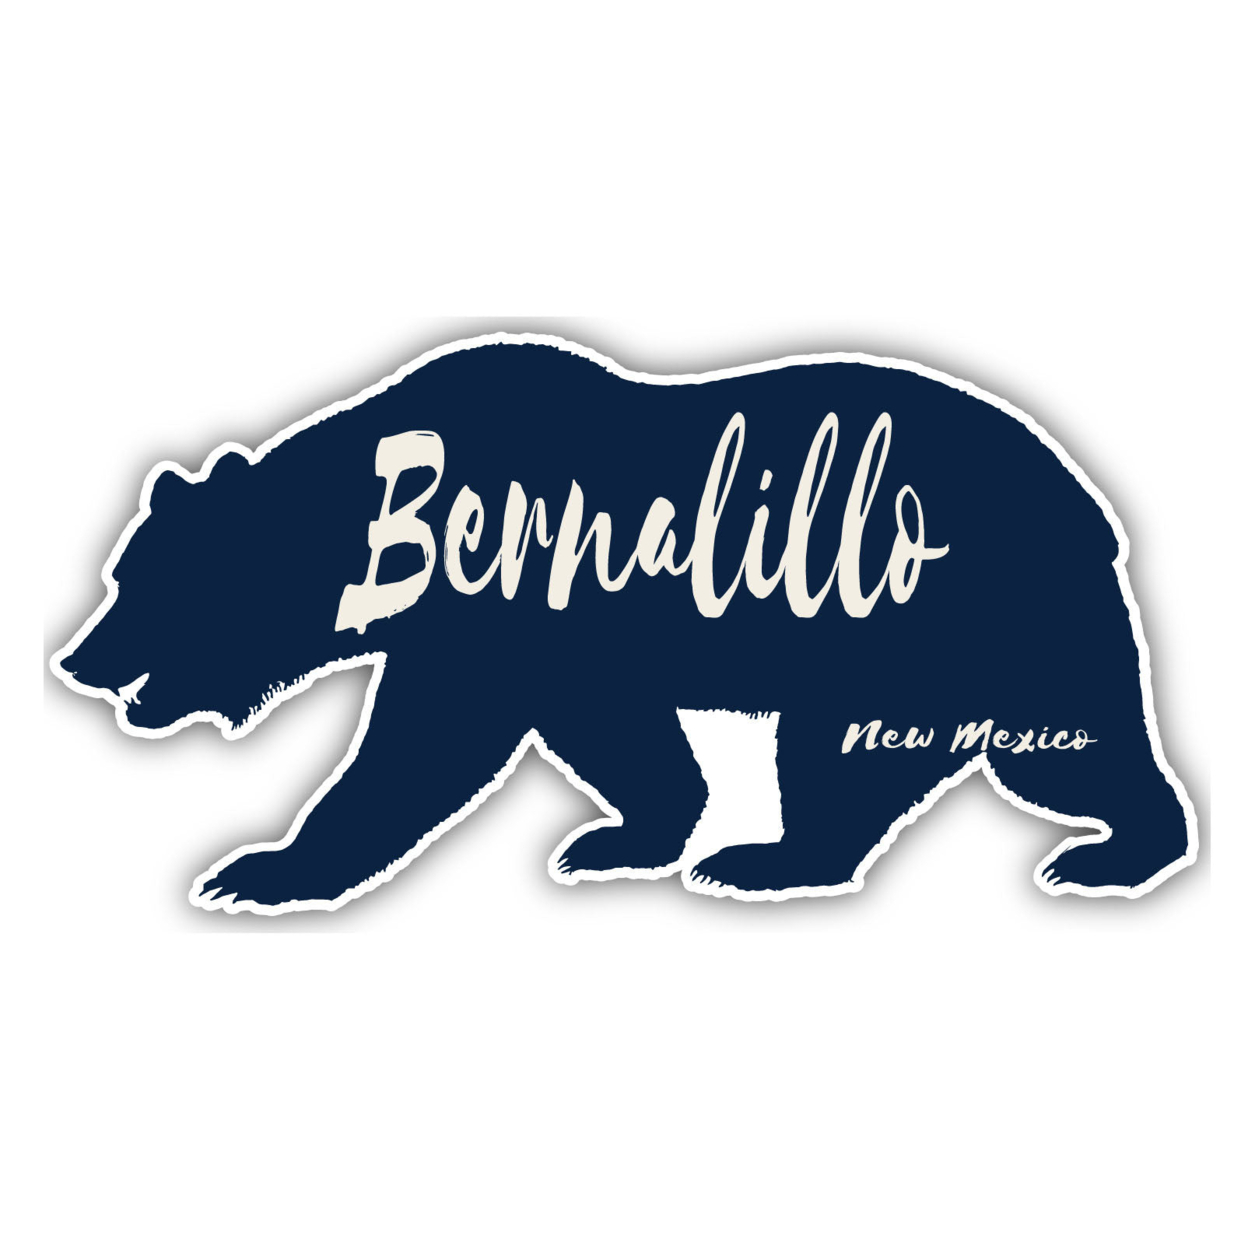 Bernalillo New Mexico Souvenir Decorative Stickers (Choose Theme And Size) - Single Unit, 2-Inch, Camp Life